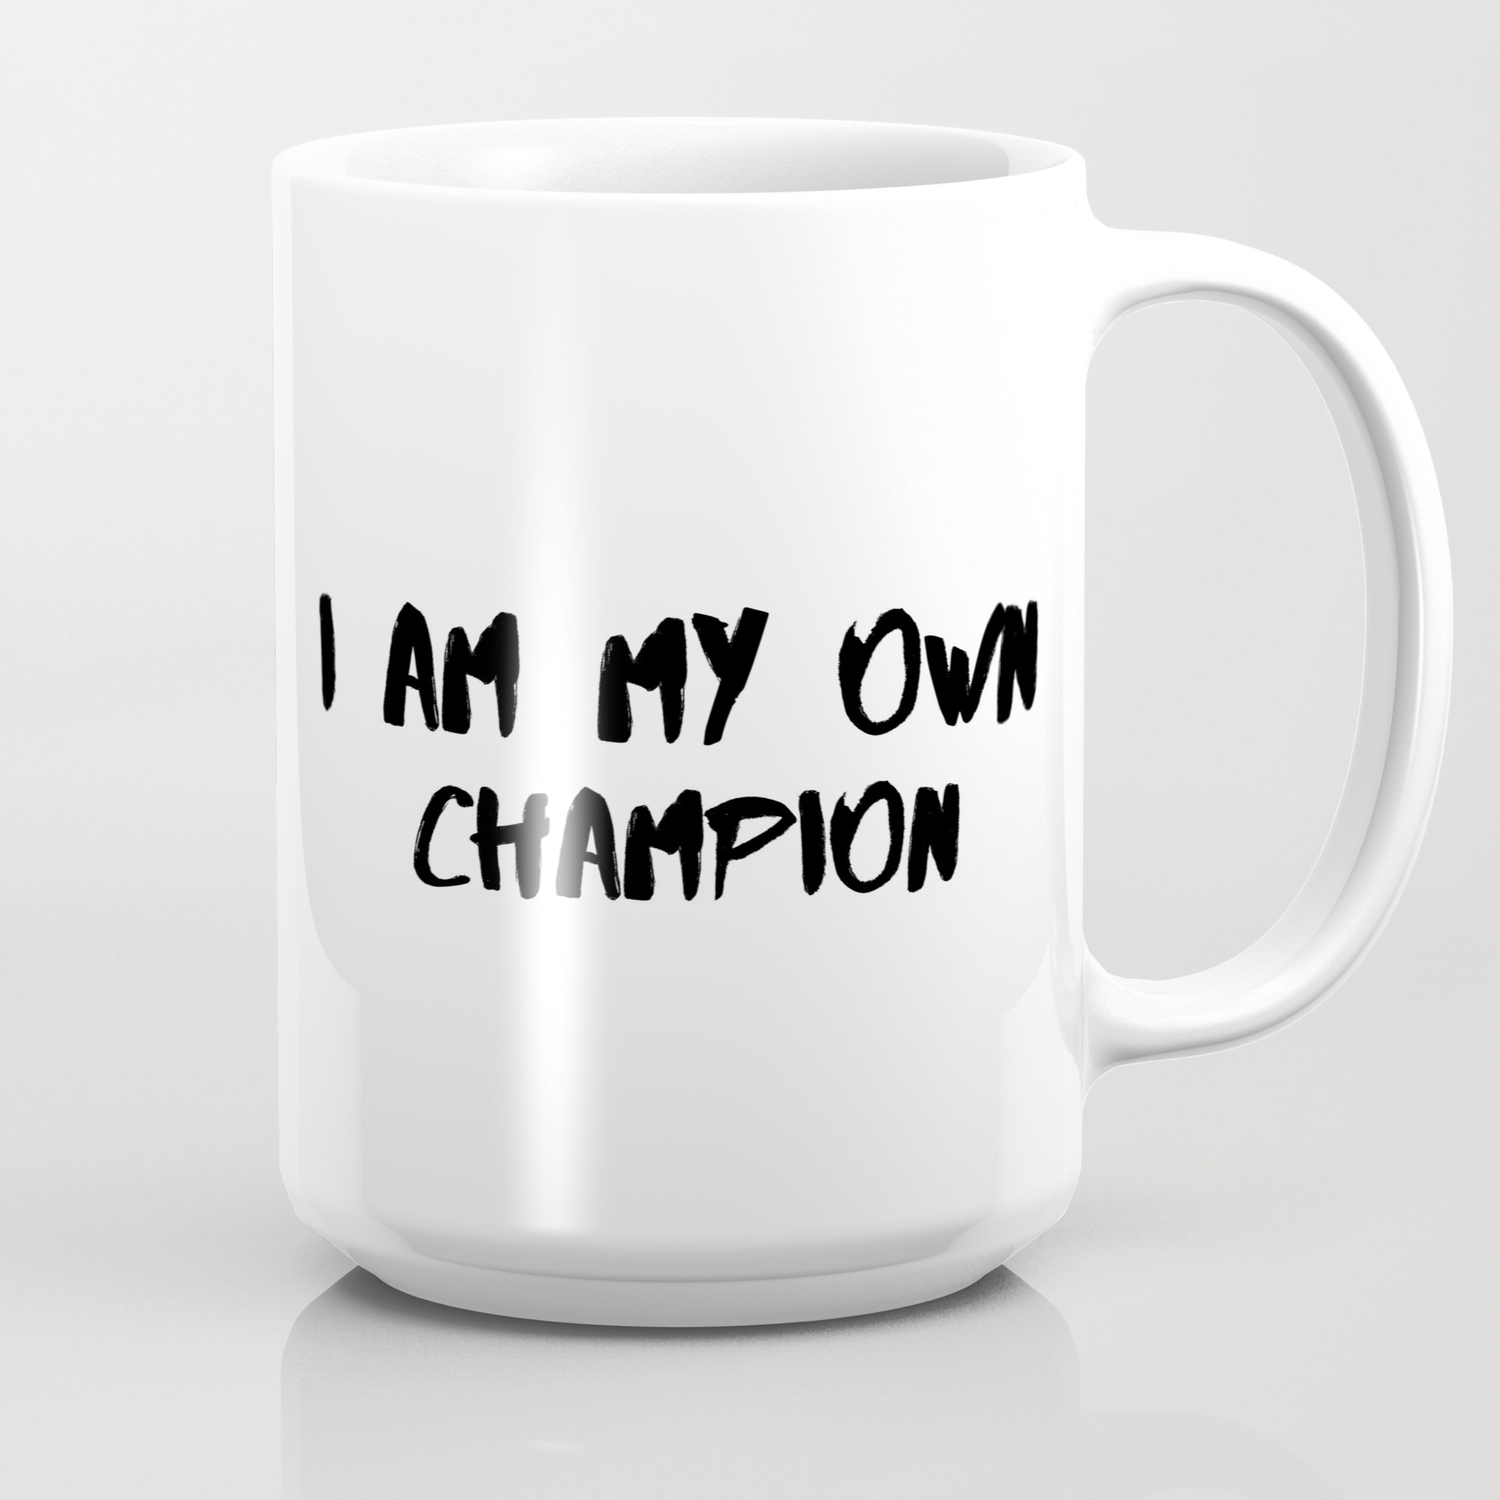 I AM OWN CHAMPION Mug by Monanza |